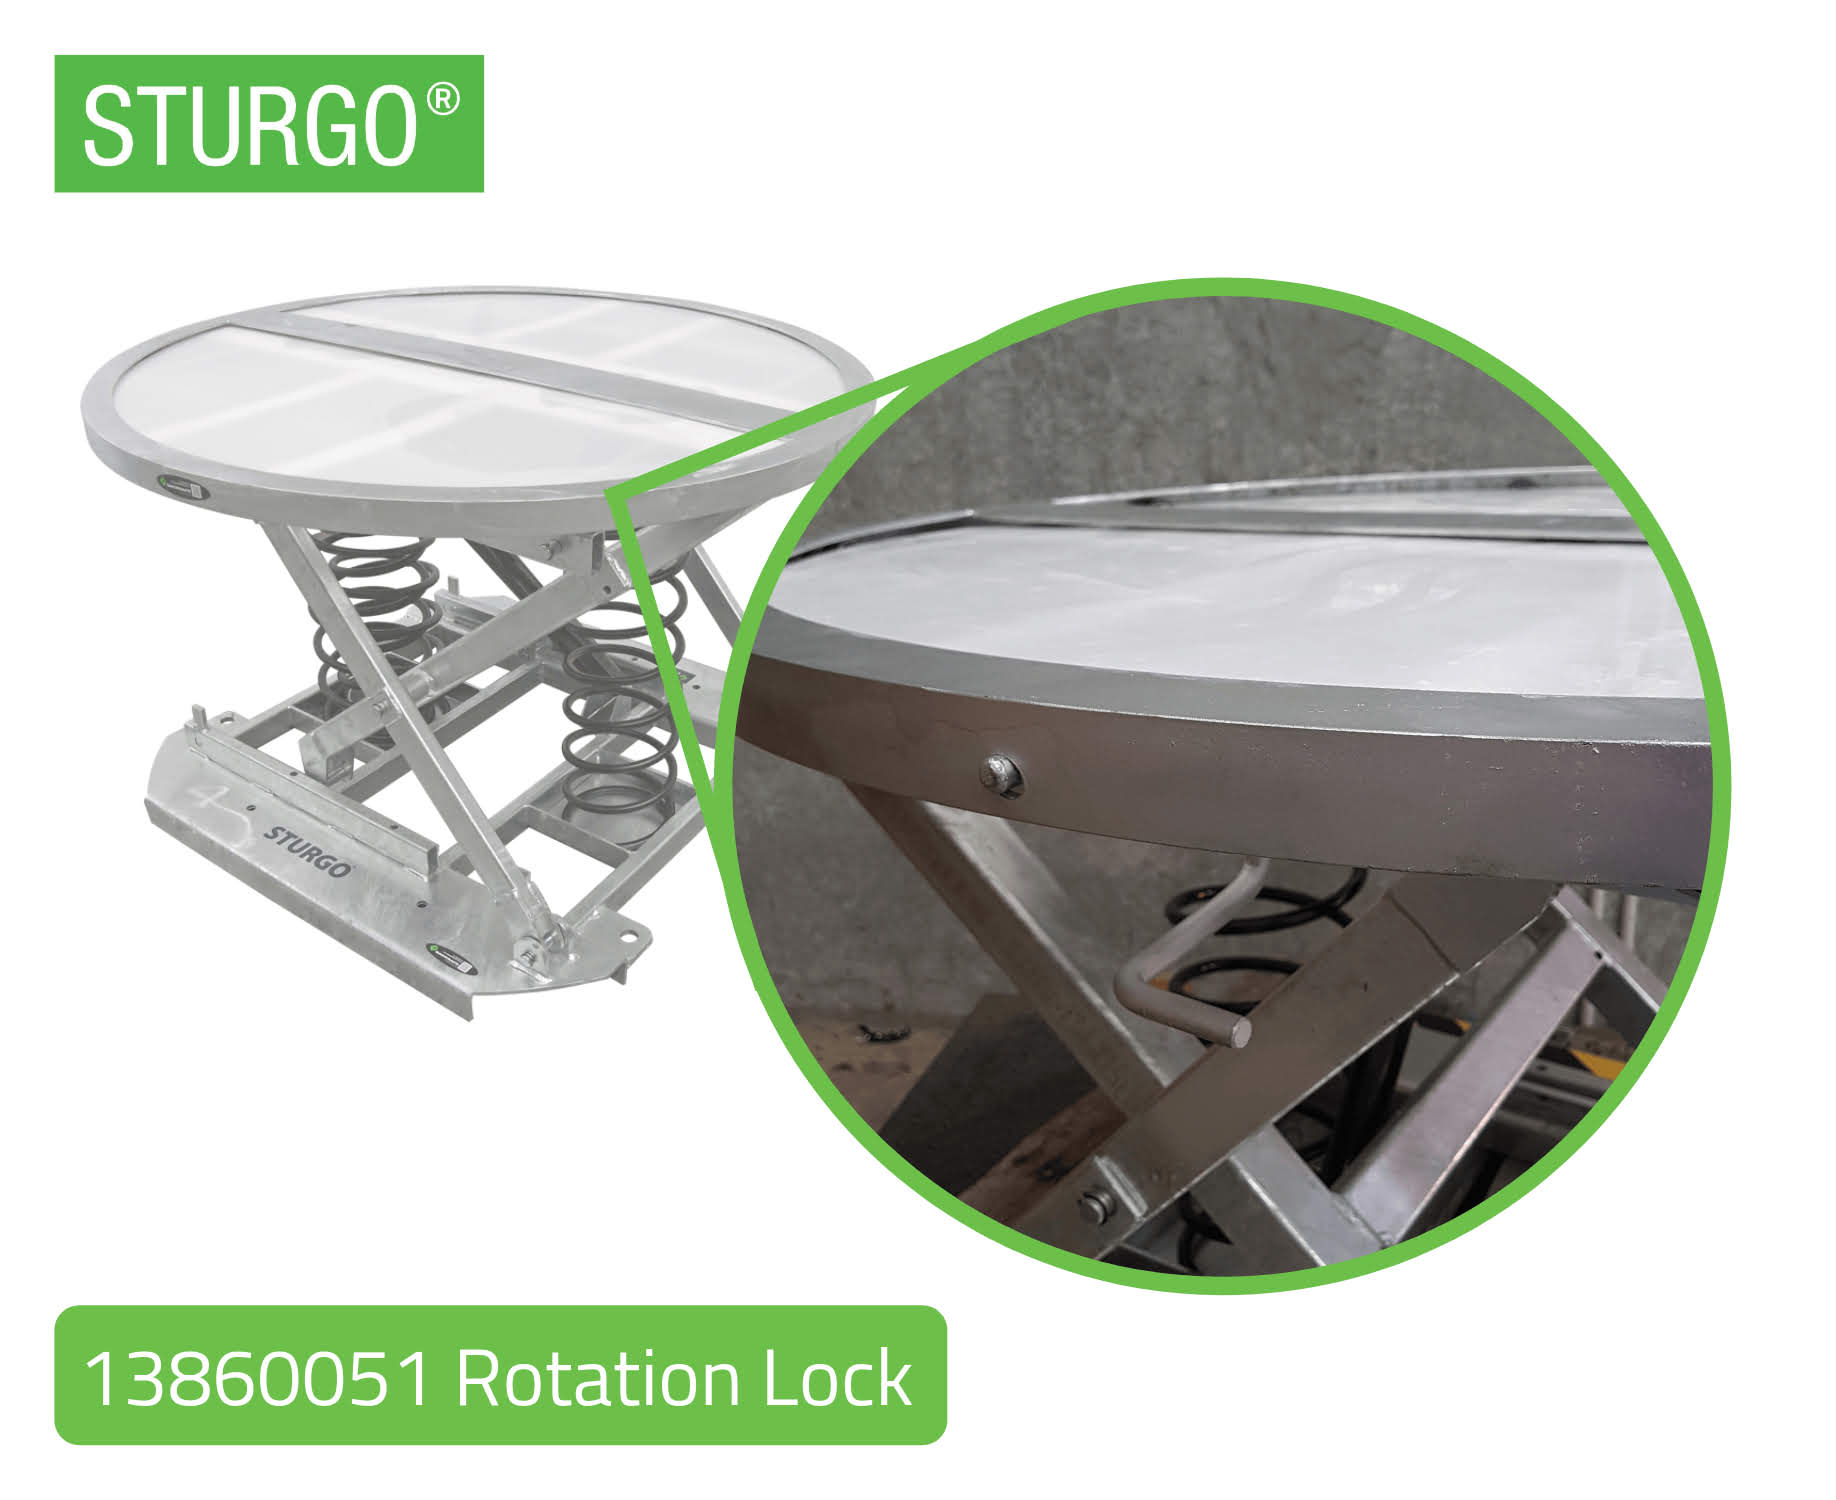 STURGO® Spring Loaded Pallet Positioner